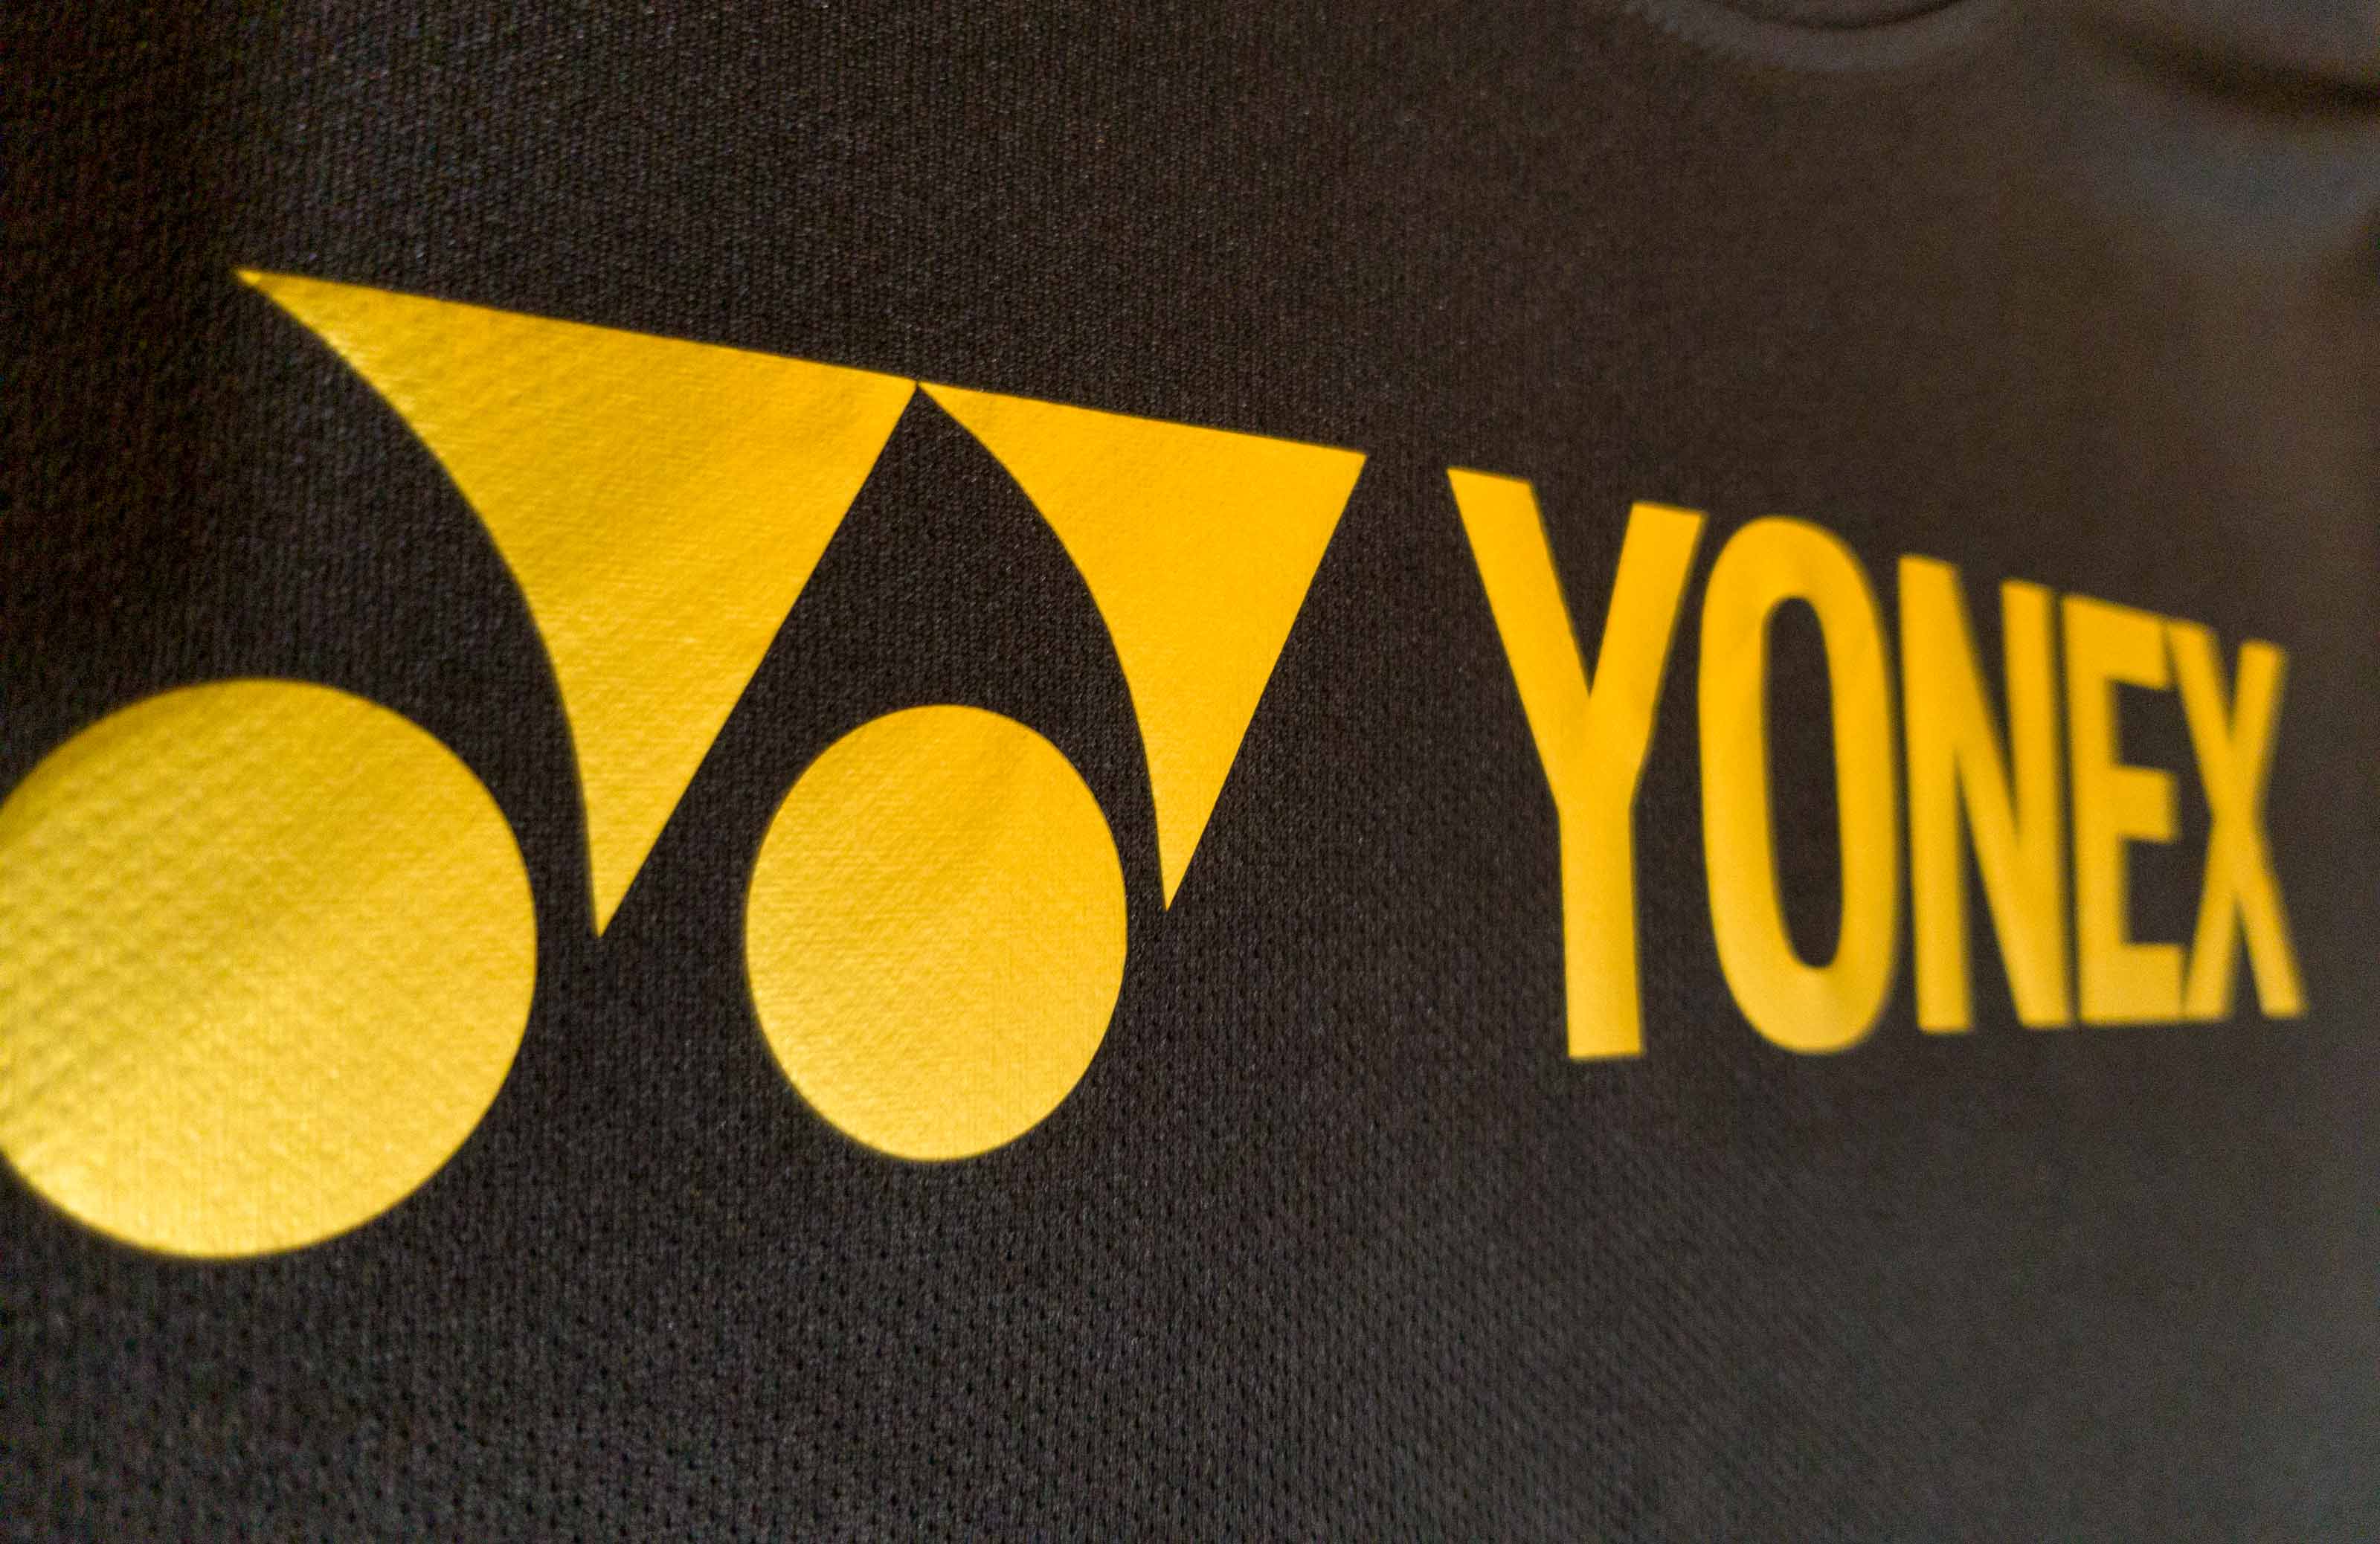 Yonex shirt - Yonex Gold close look front